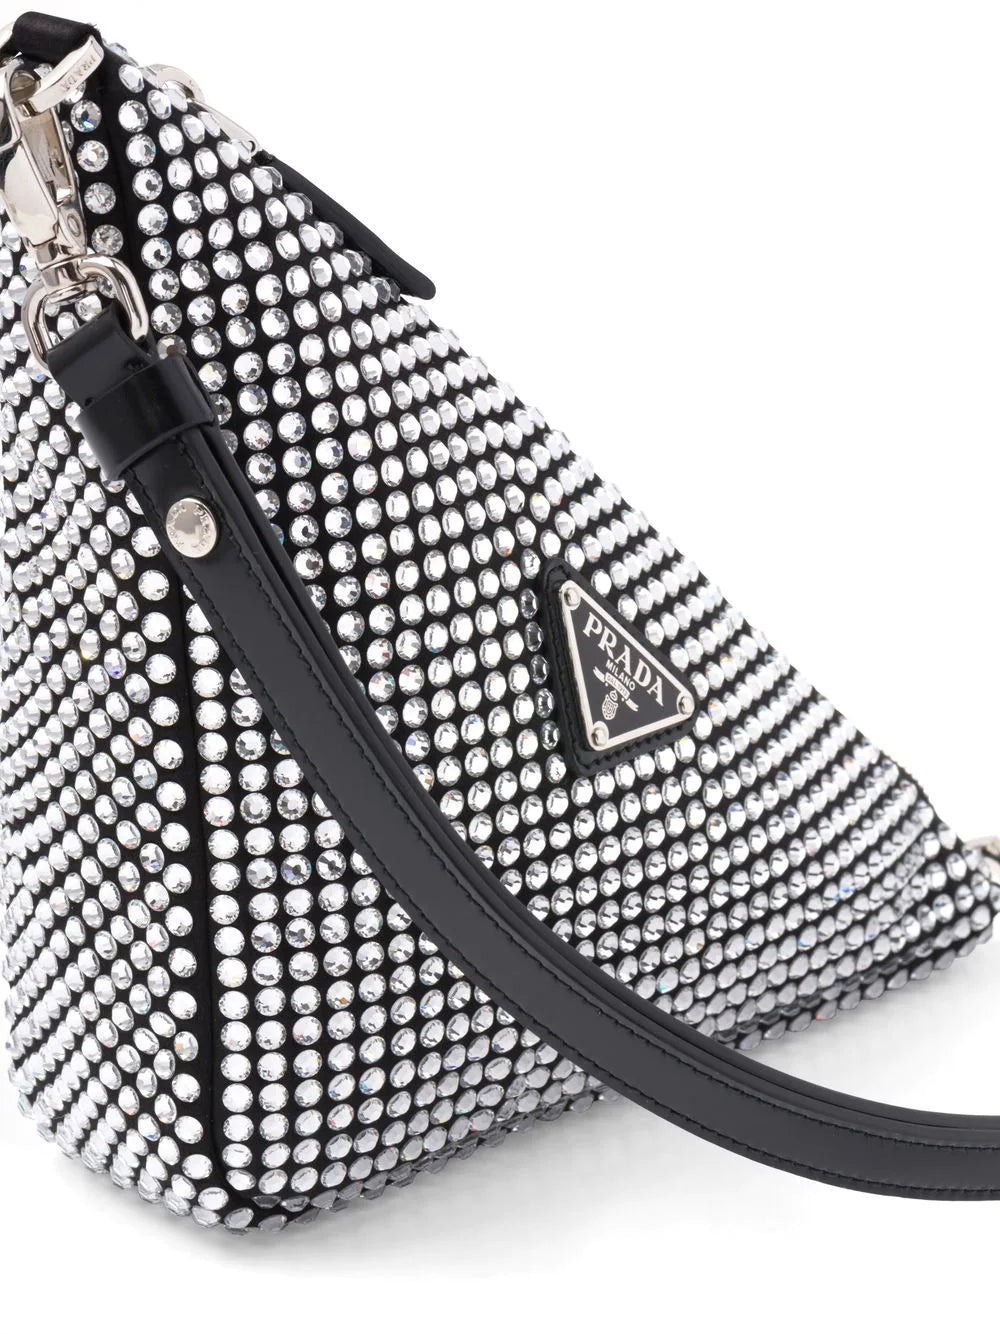 Prada Crystal-embellished Triangle Bag